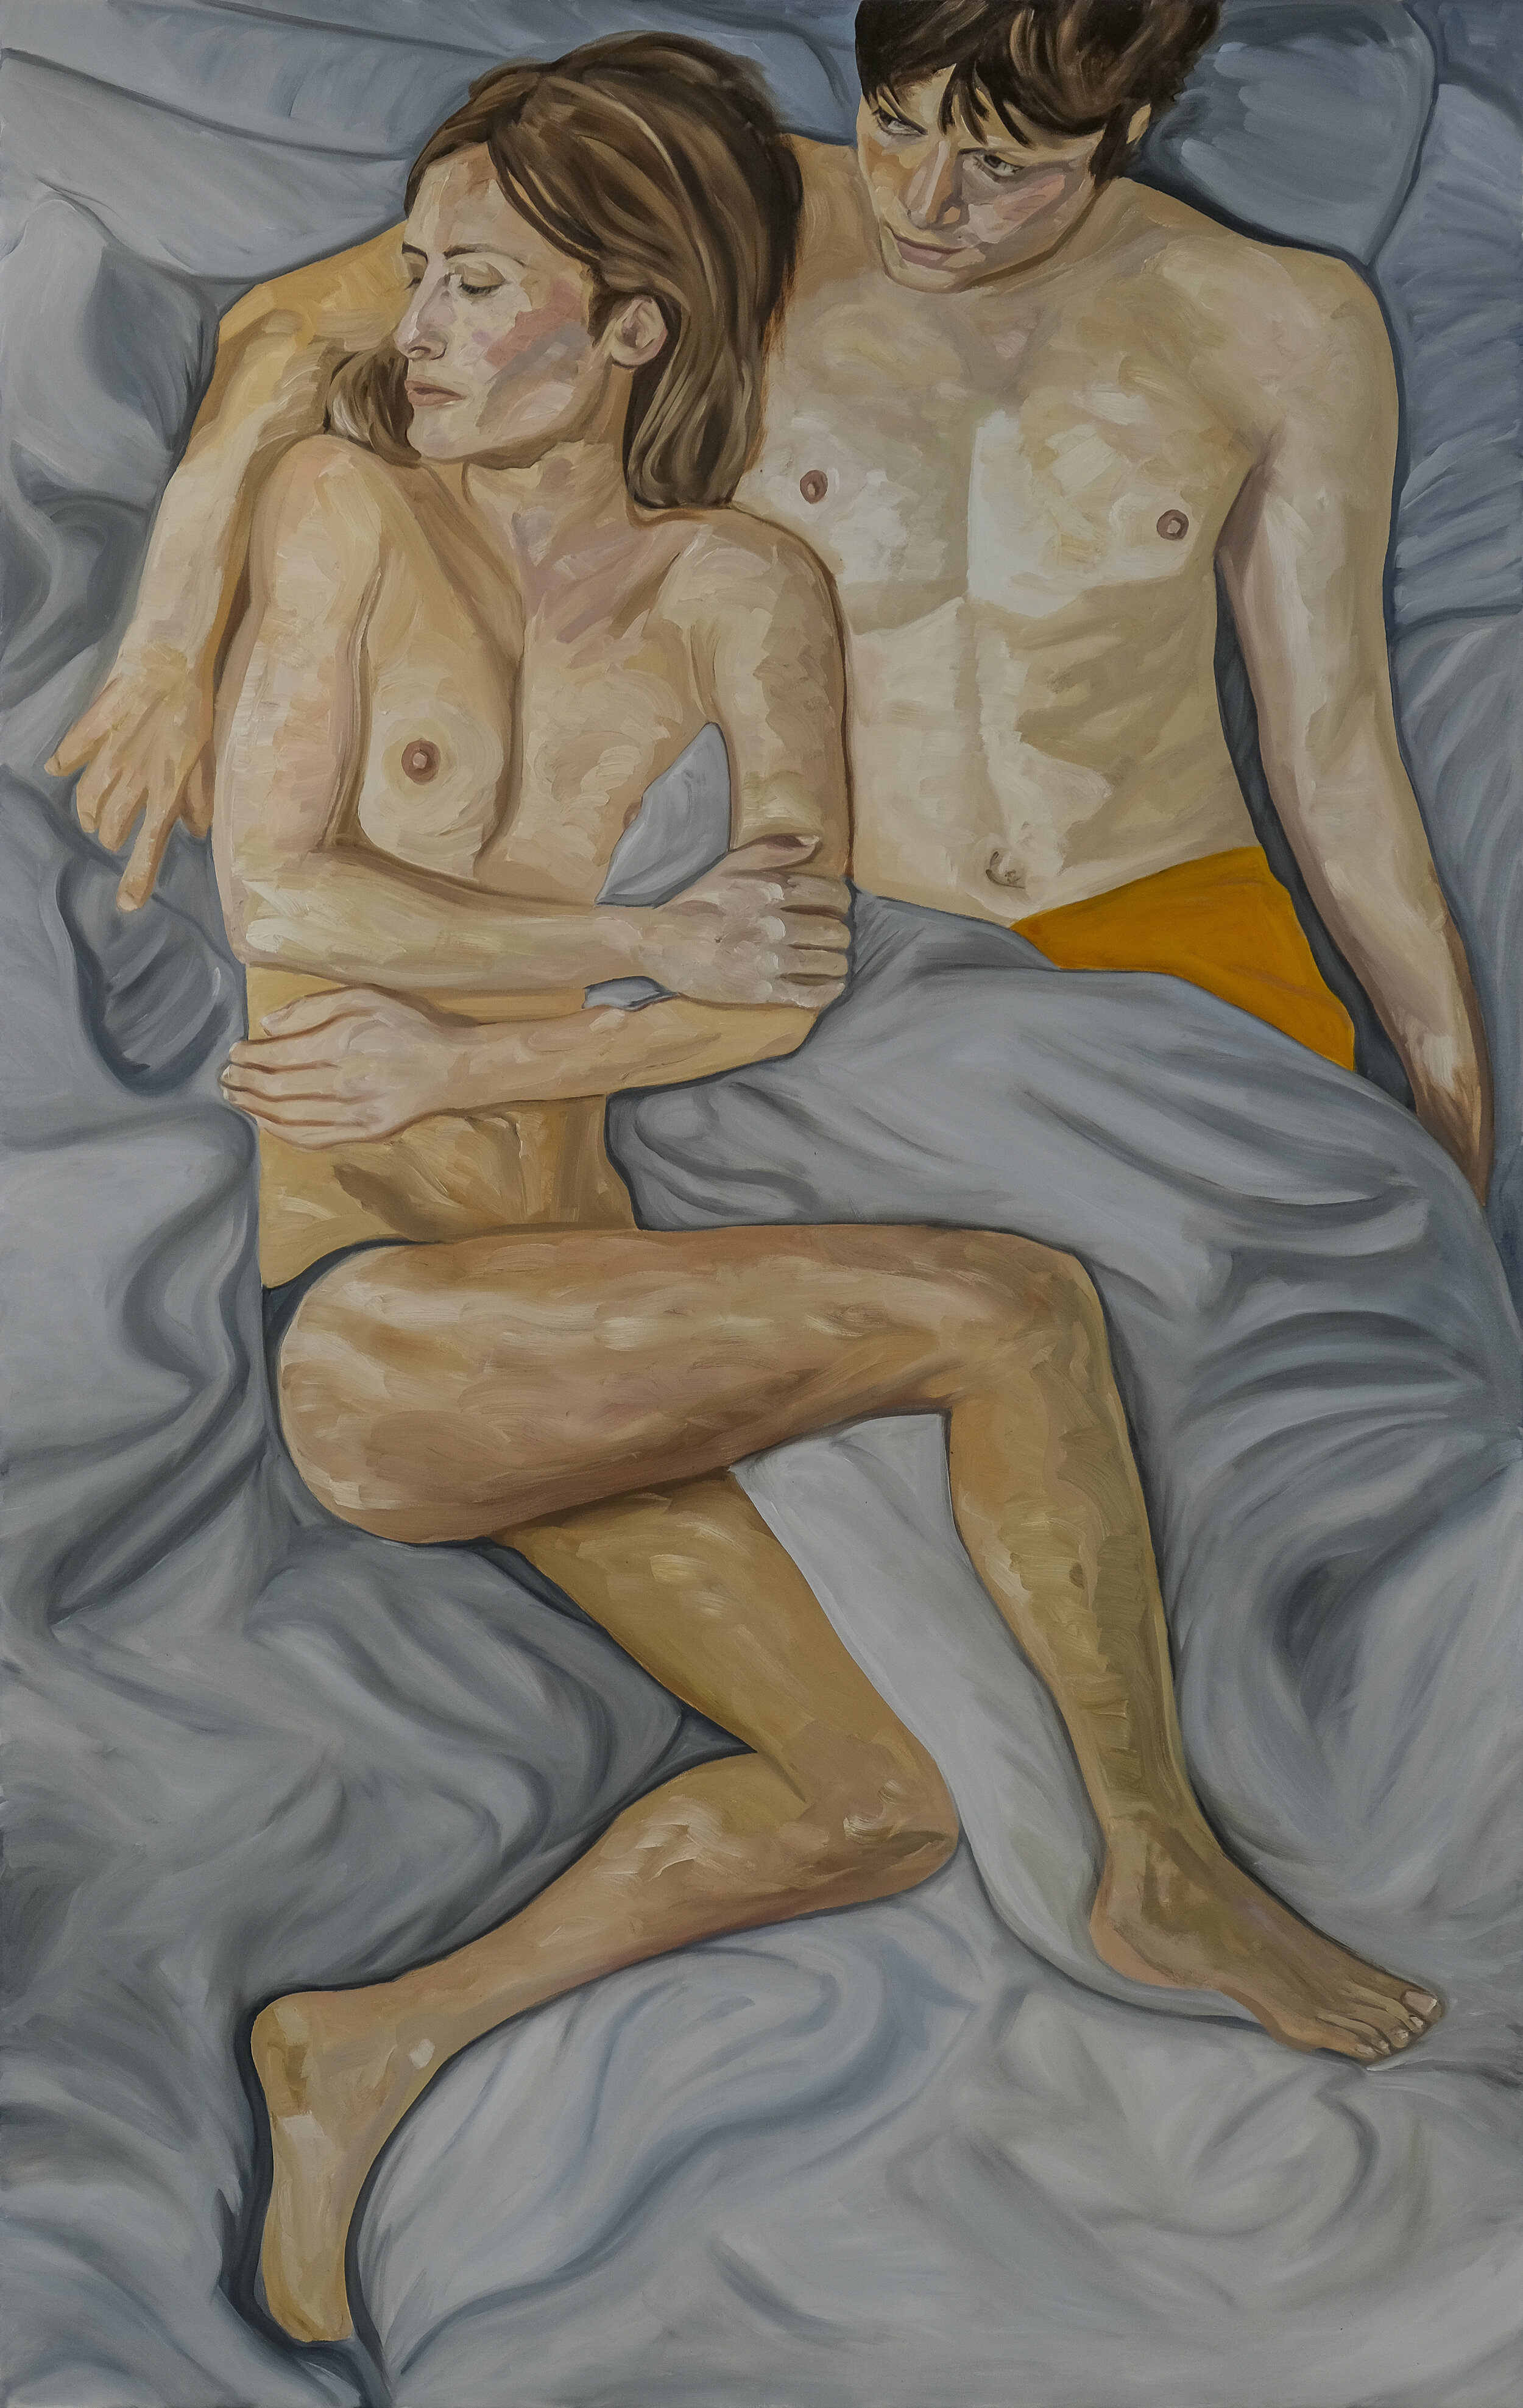   Model Couple   2021  Oil on canvas  120cm x 190cm 